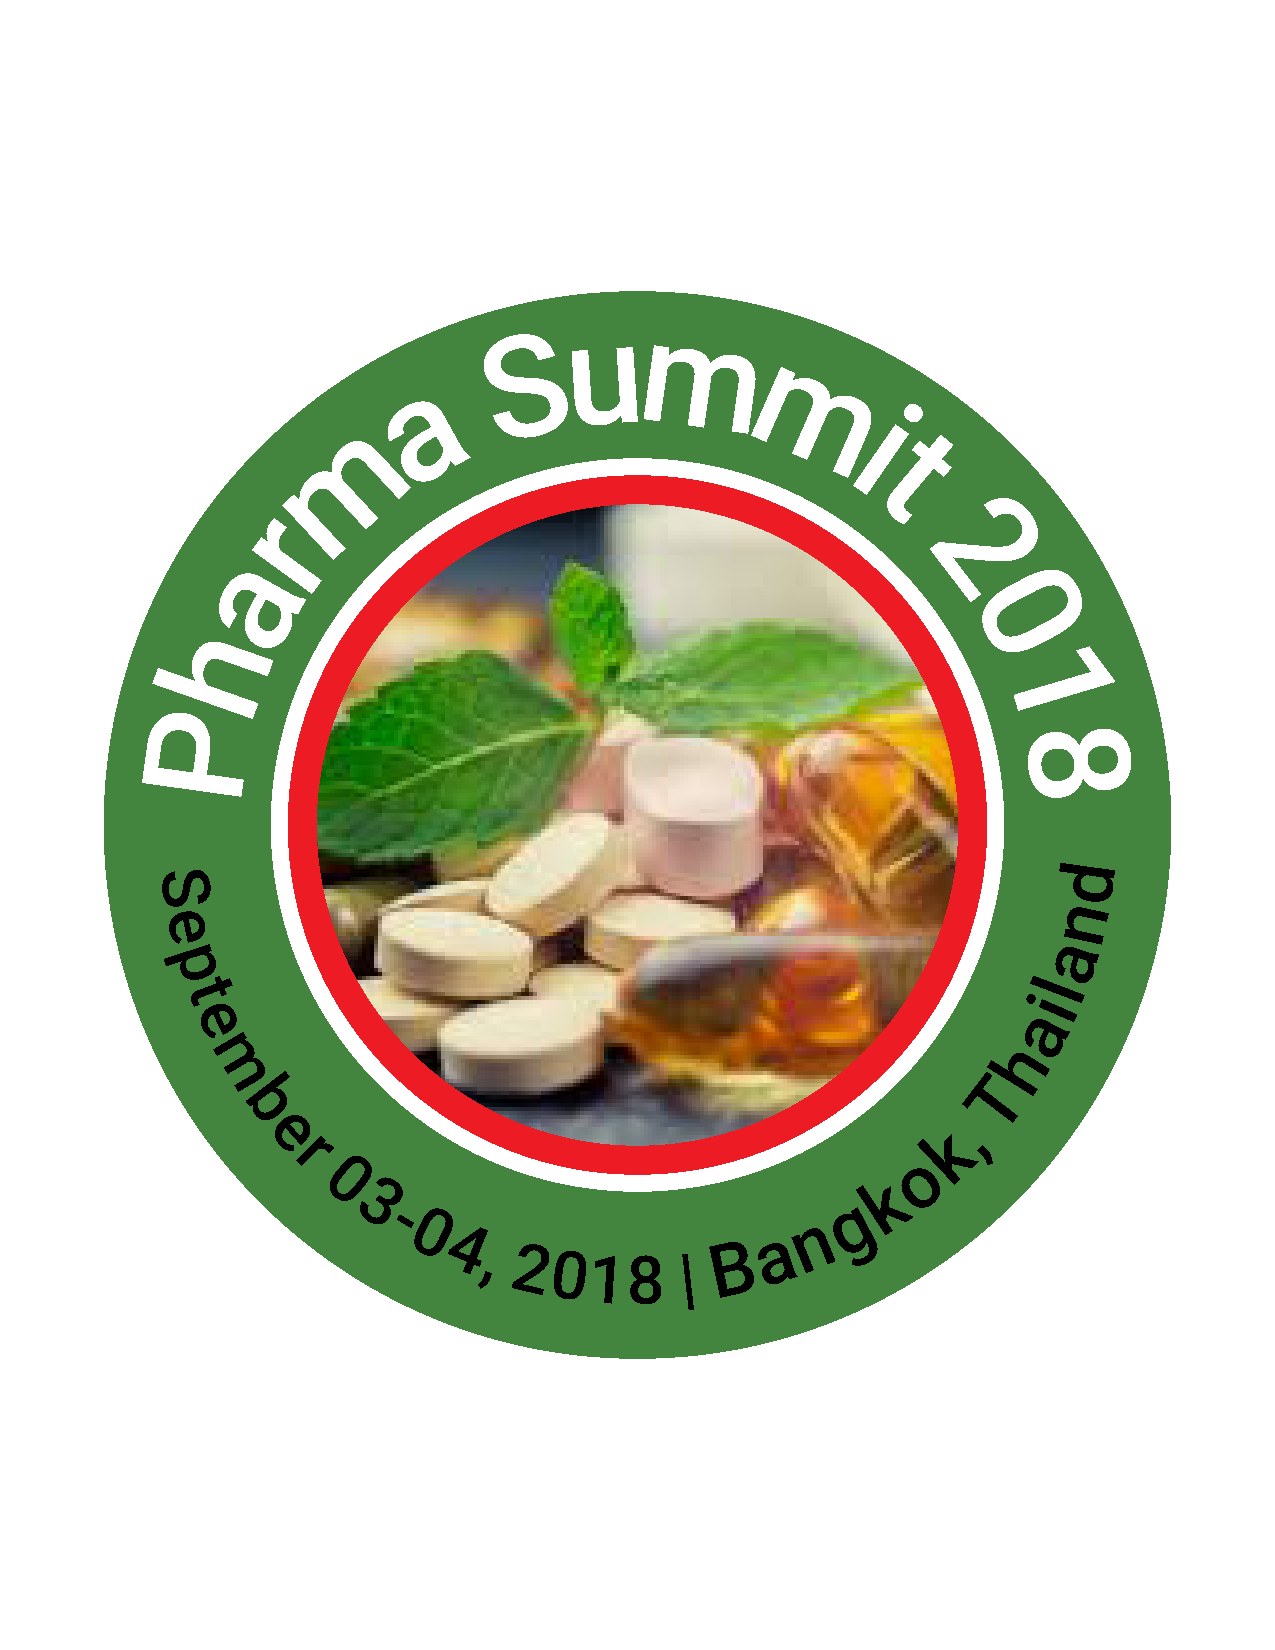 Photos of Global Pharma Summit